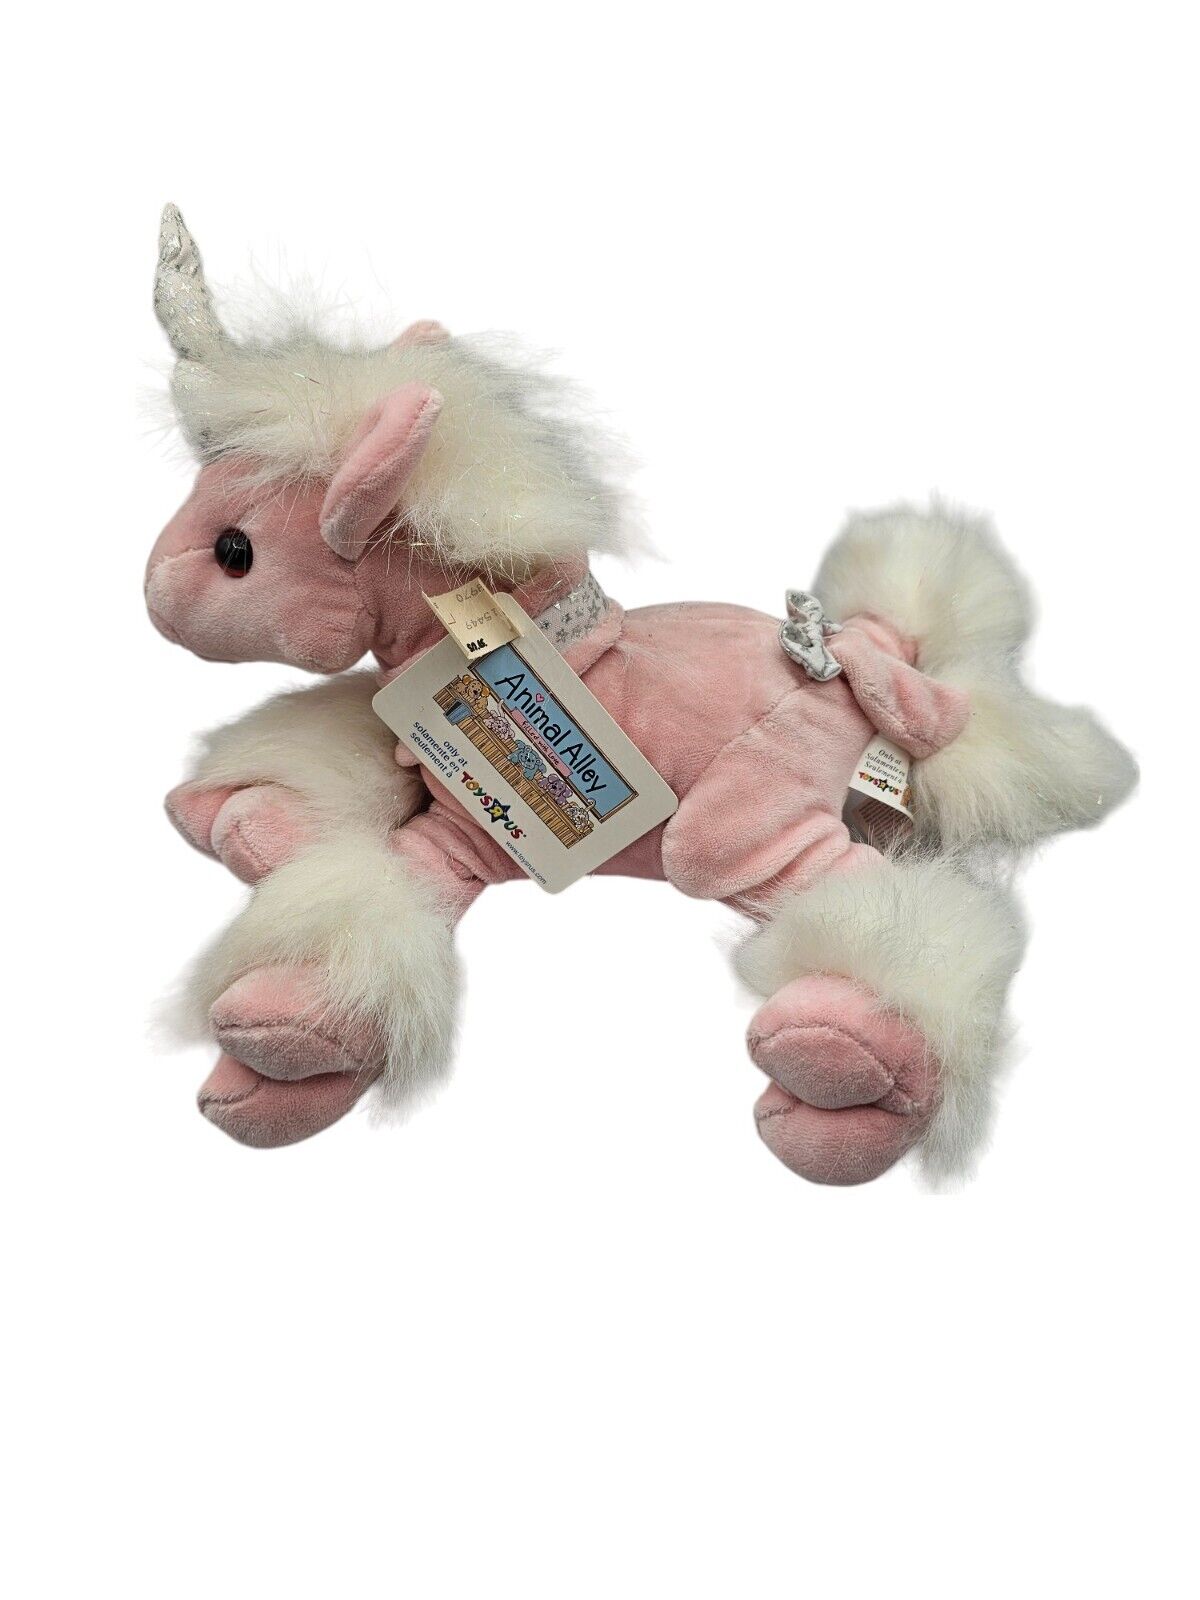 Vintage Toys R Us Animal Alley Plush Stuffed Animal UNICORN Pink w/ Tags